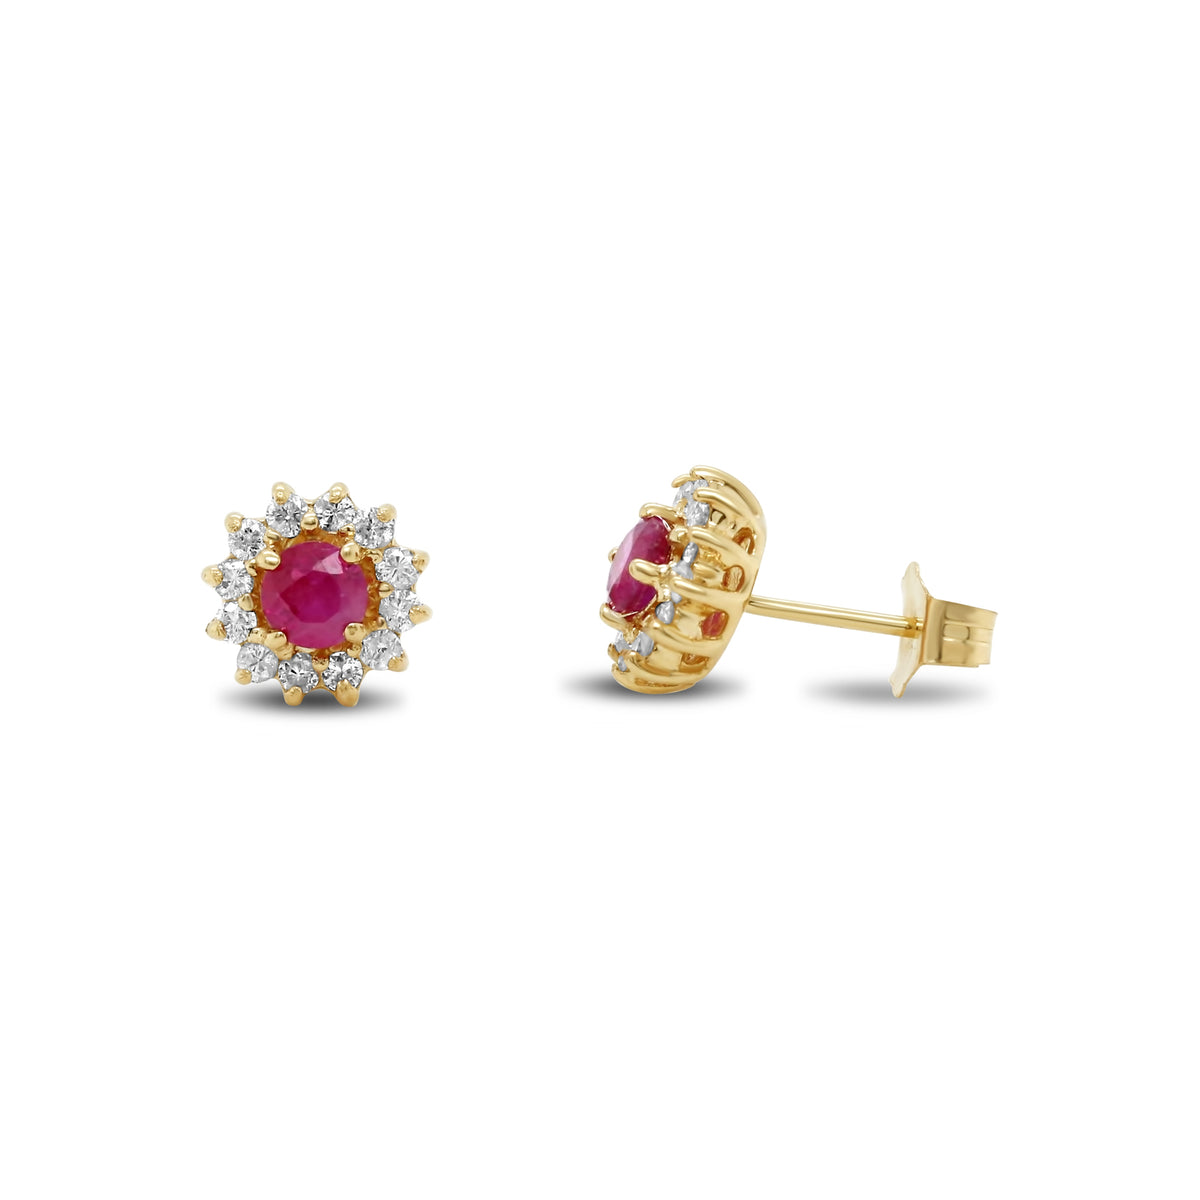 14k yellow gold round cut Burma rubies with diamond halo stud estate earrings